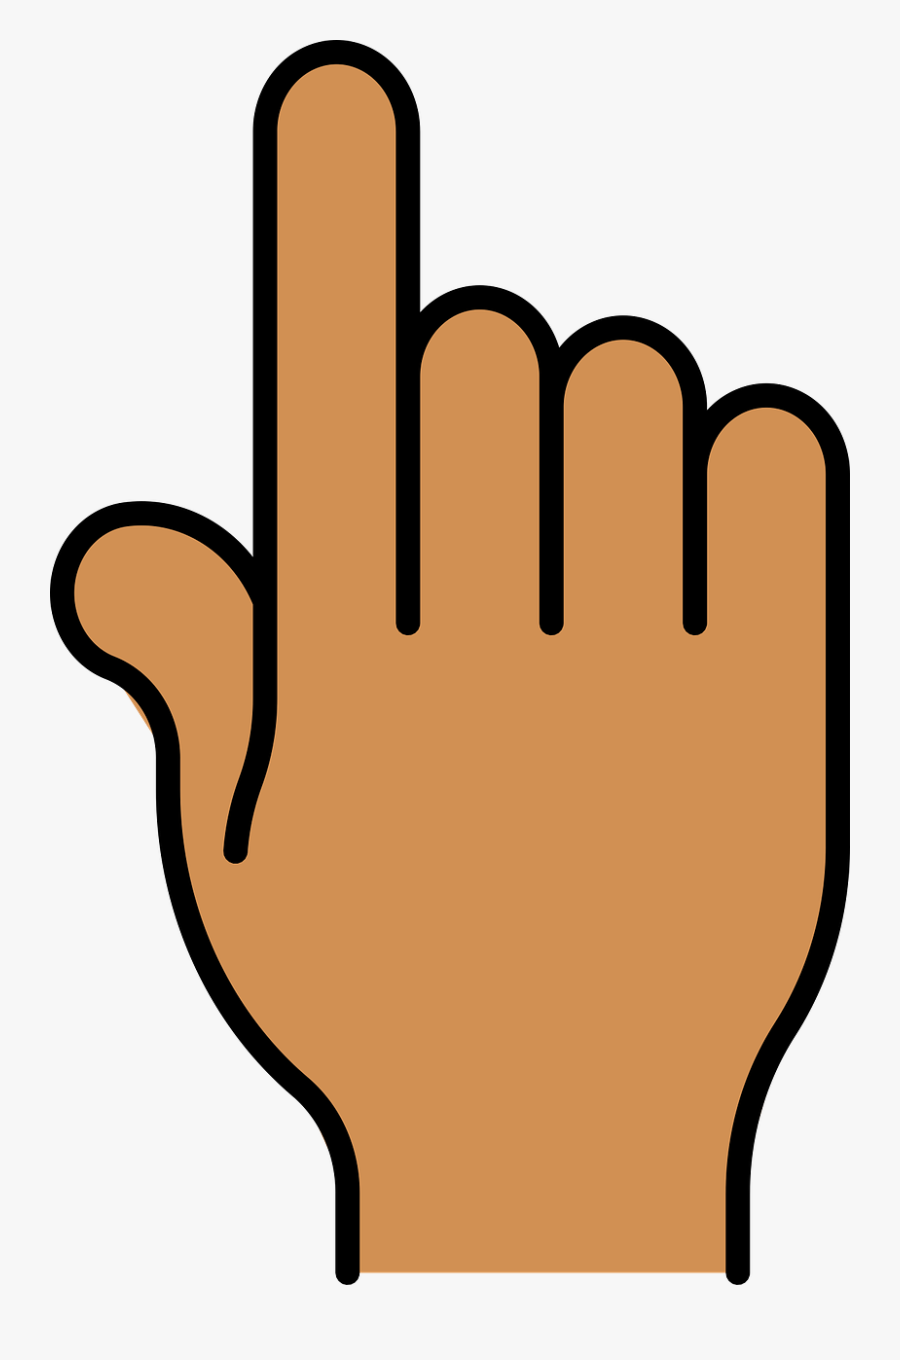 Index Finger Pointer Click Hand Png Image - Pointer Finger Clipart, Transparent Clipart